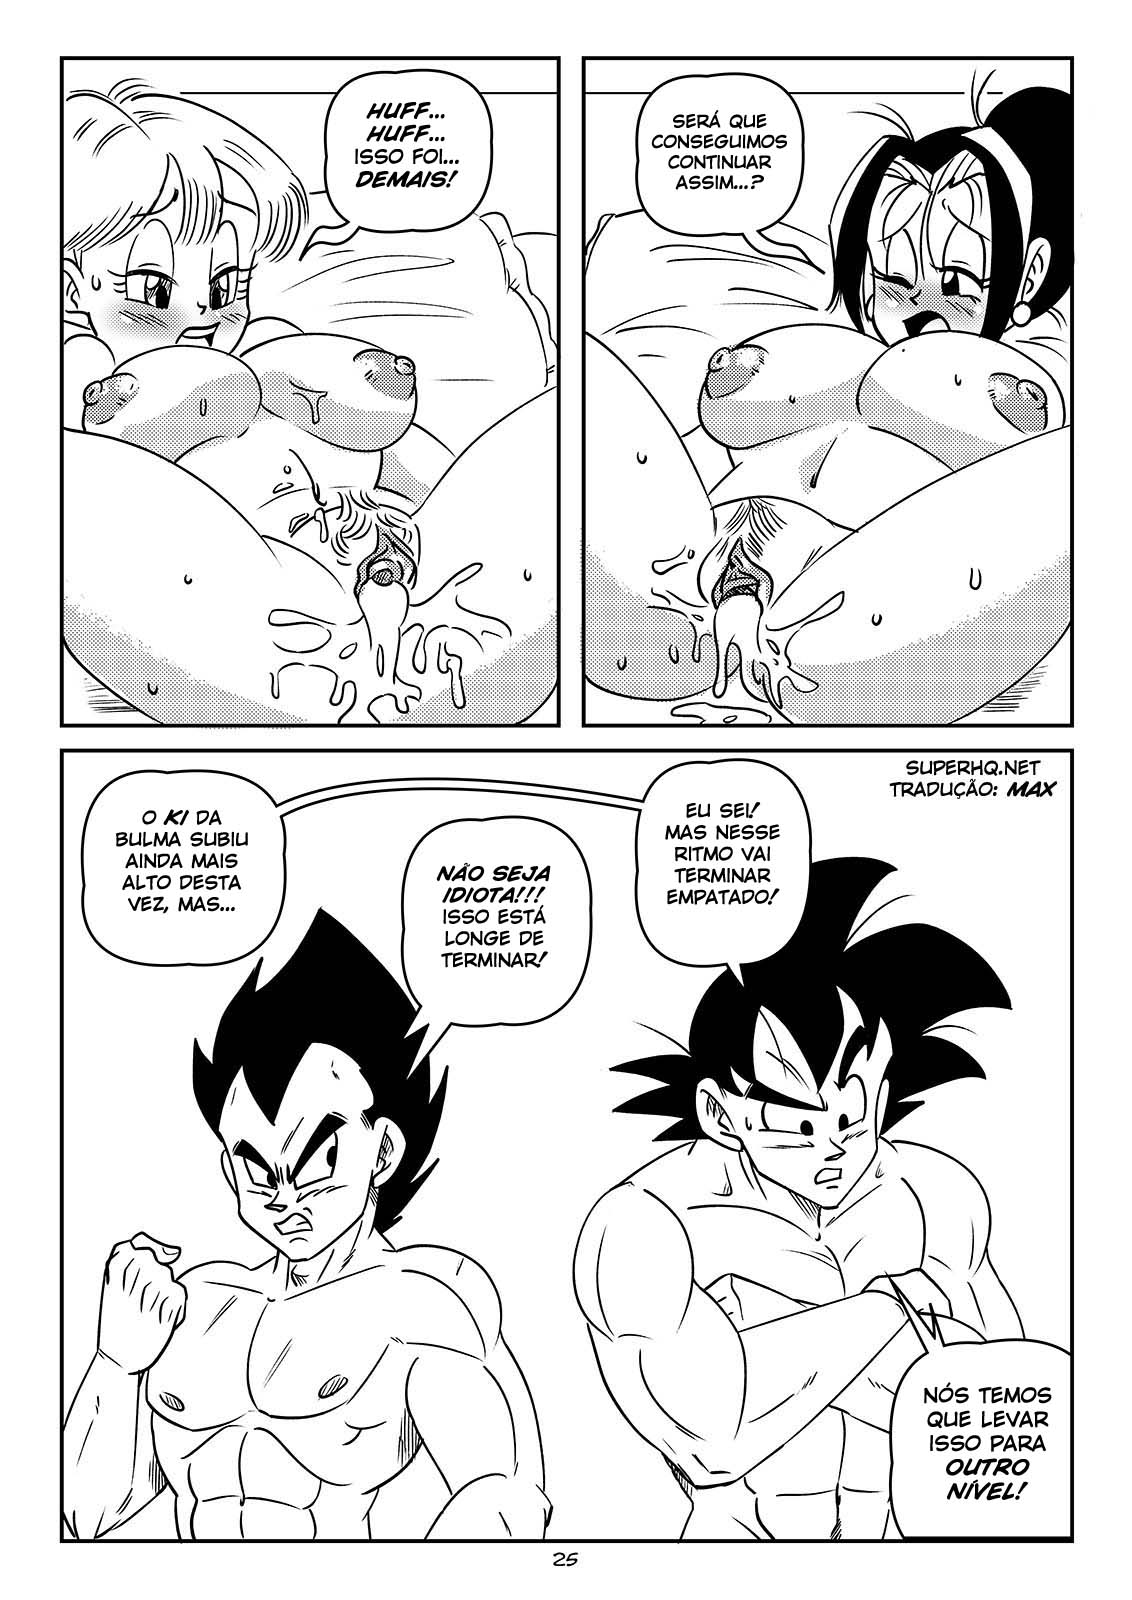 Troca de casais - Chi-Chi e Vegeta vs Goku e Bulma